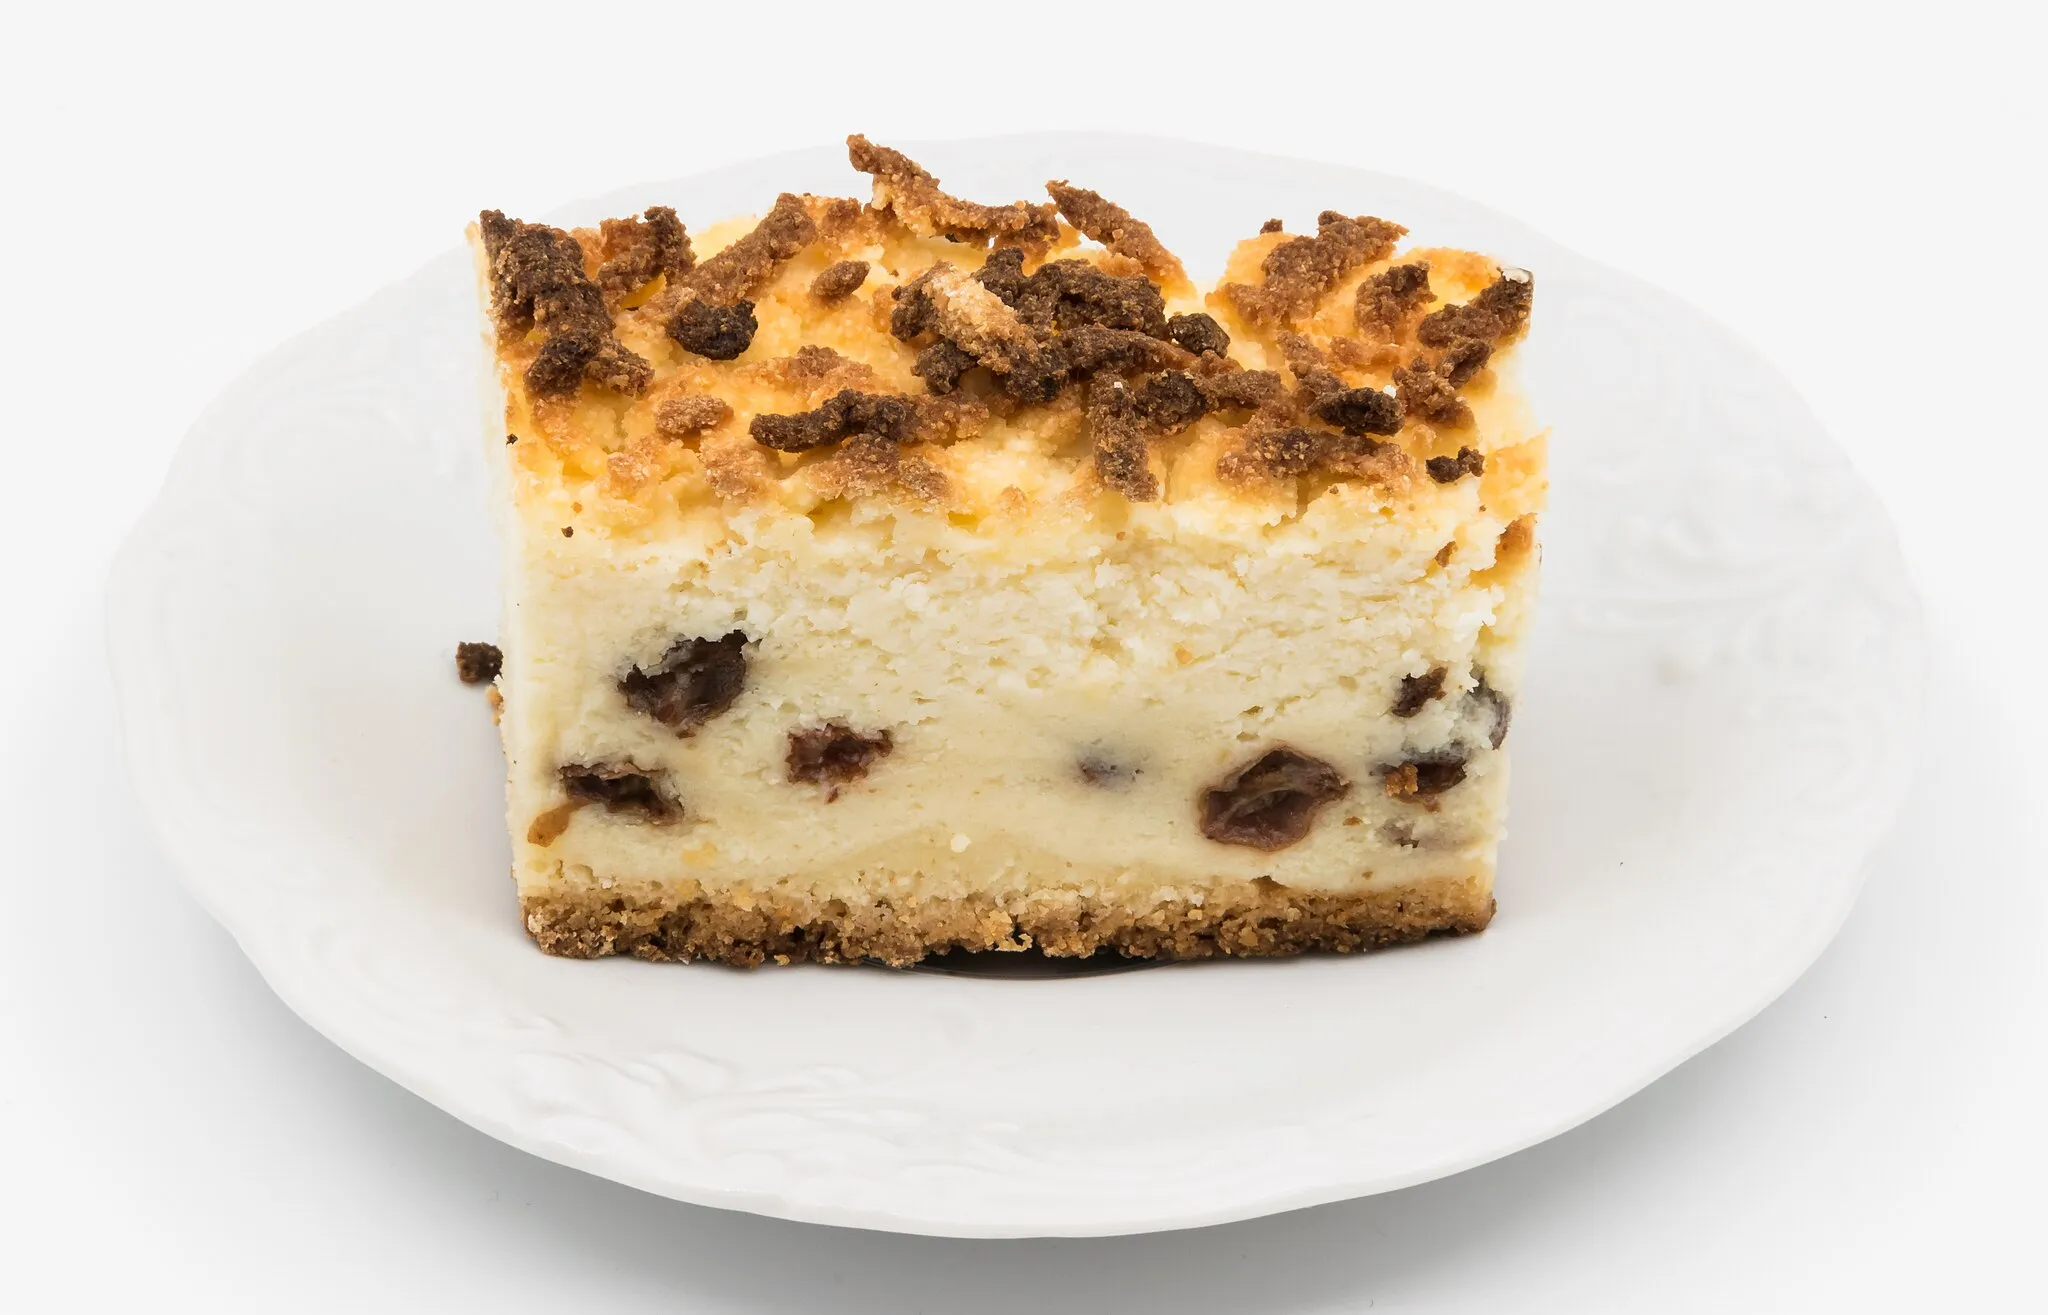 Photo showing: Cheesecake with raisins